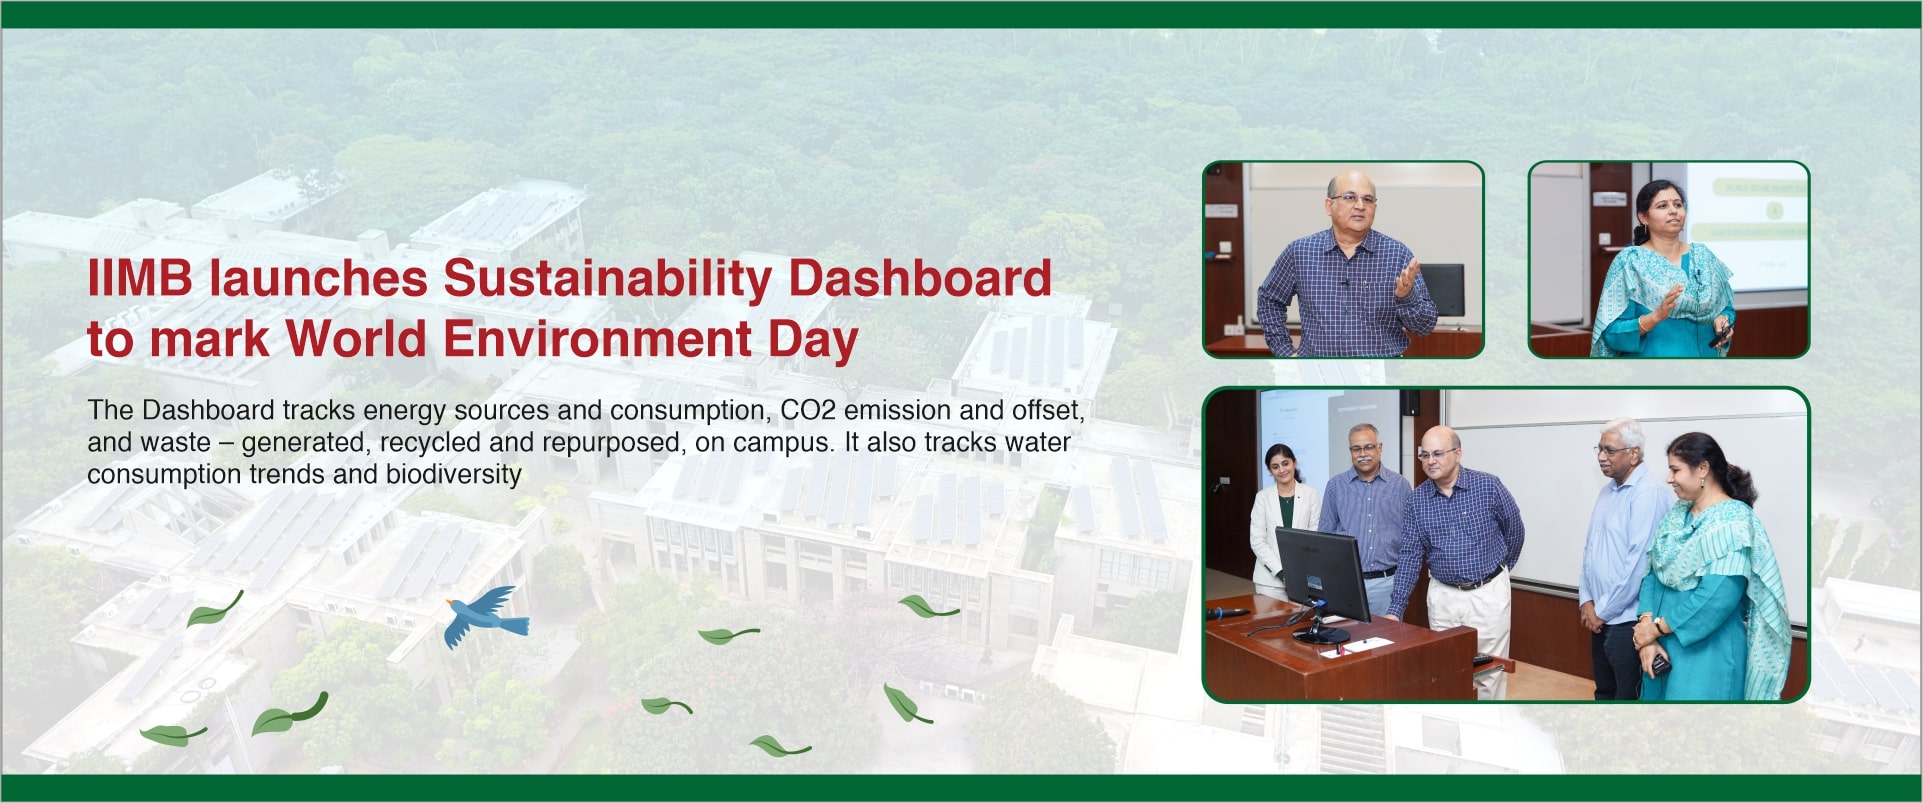 IIMB launches Sustainability Dashboard to mark World Environment Day 